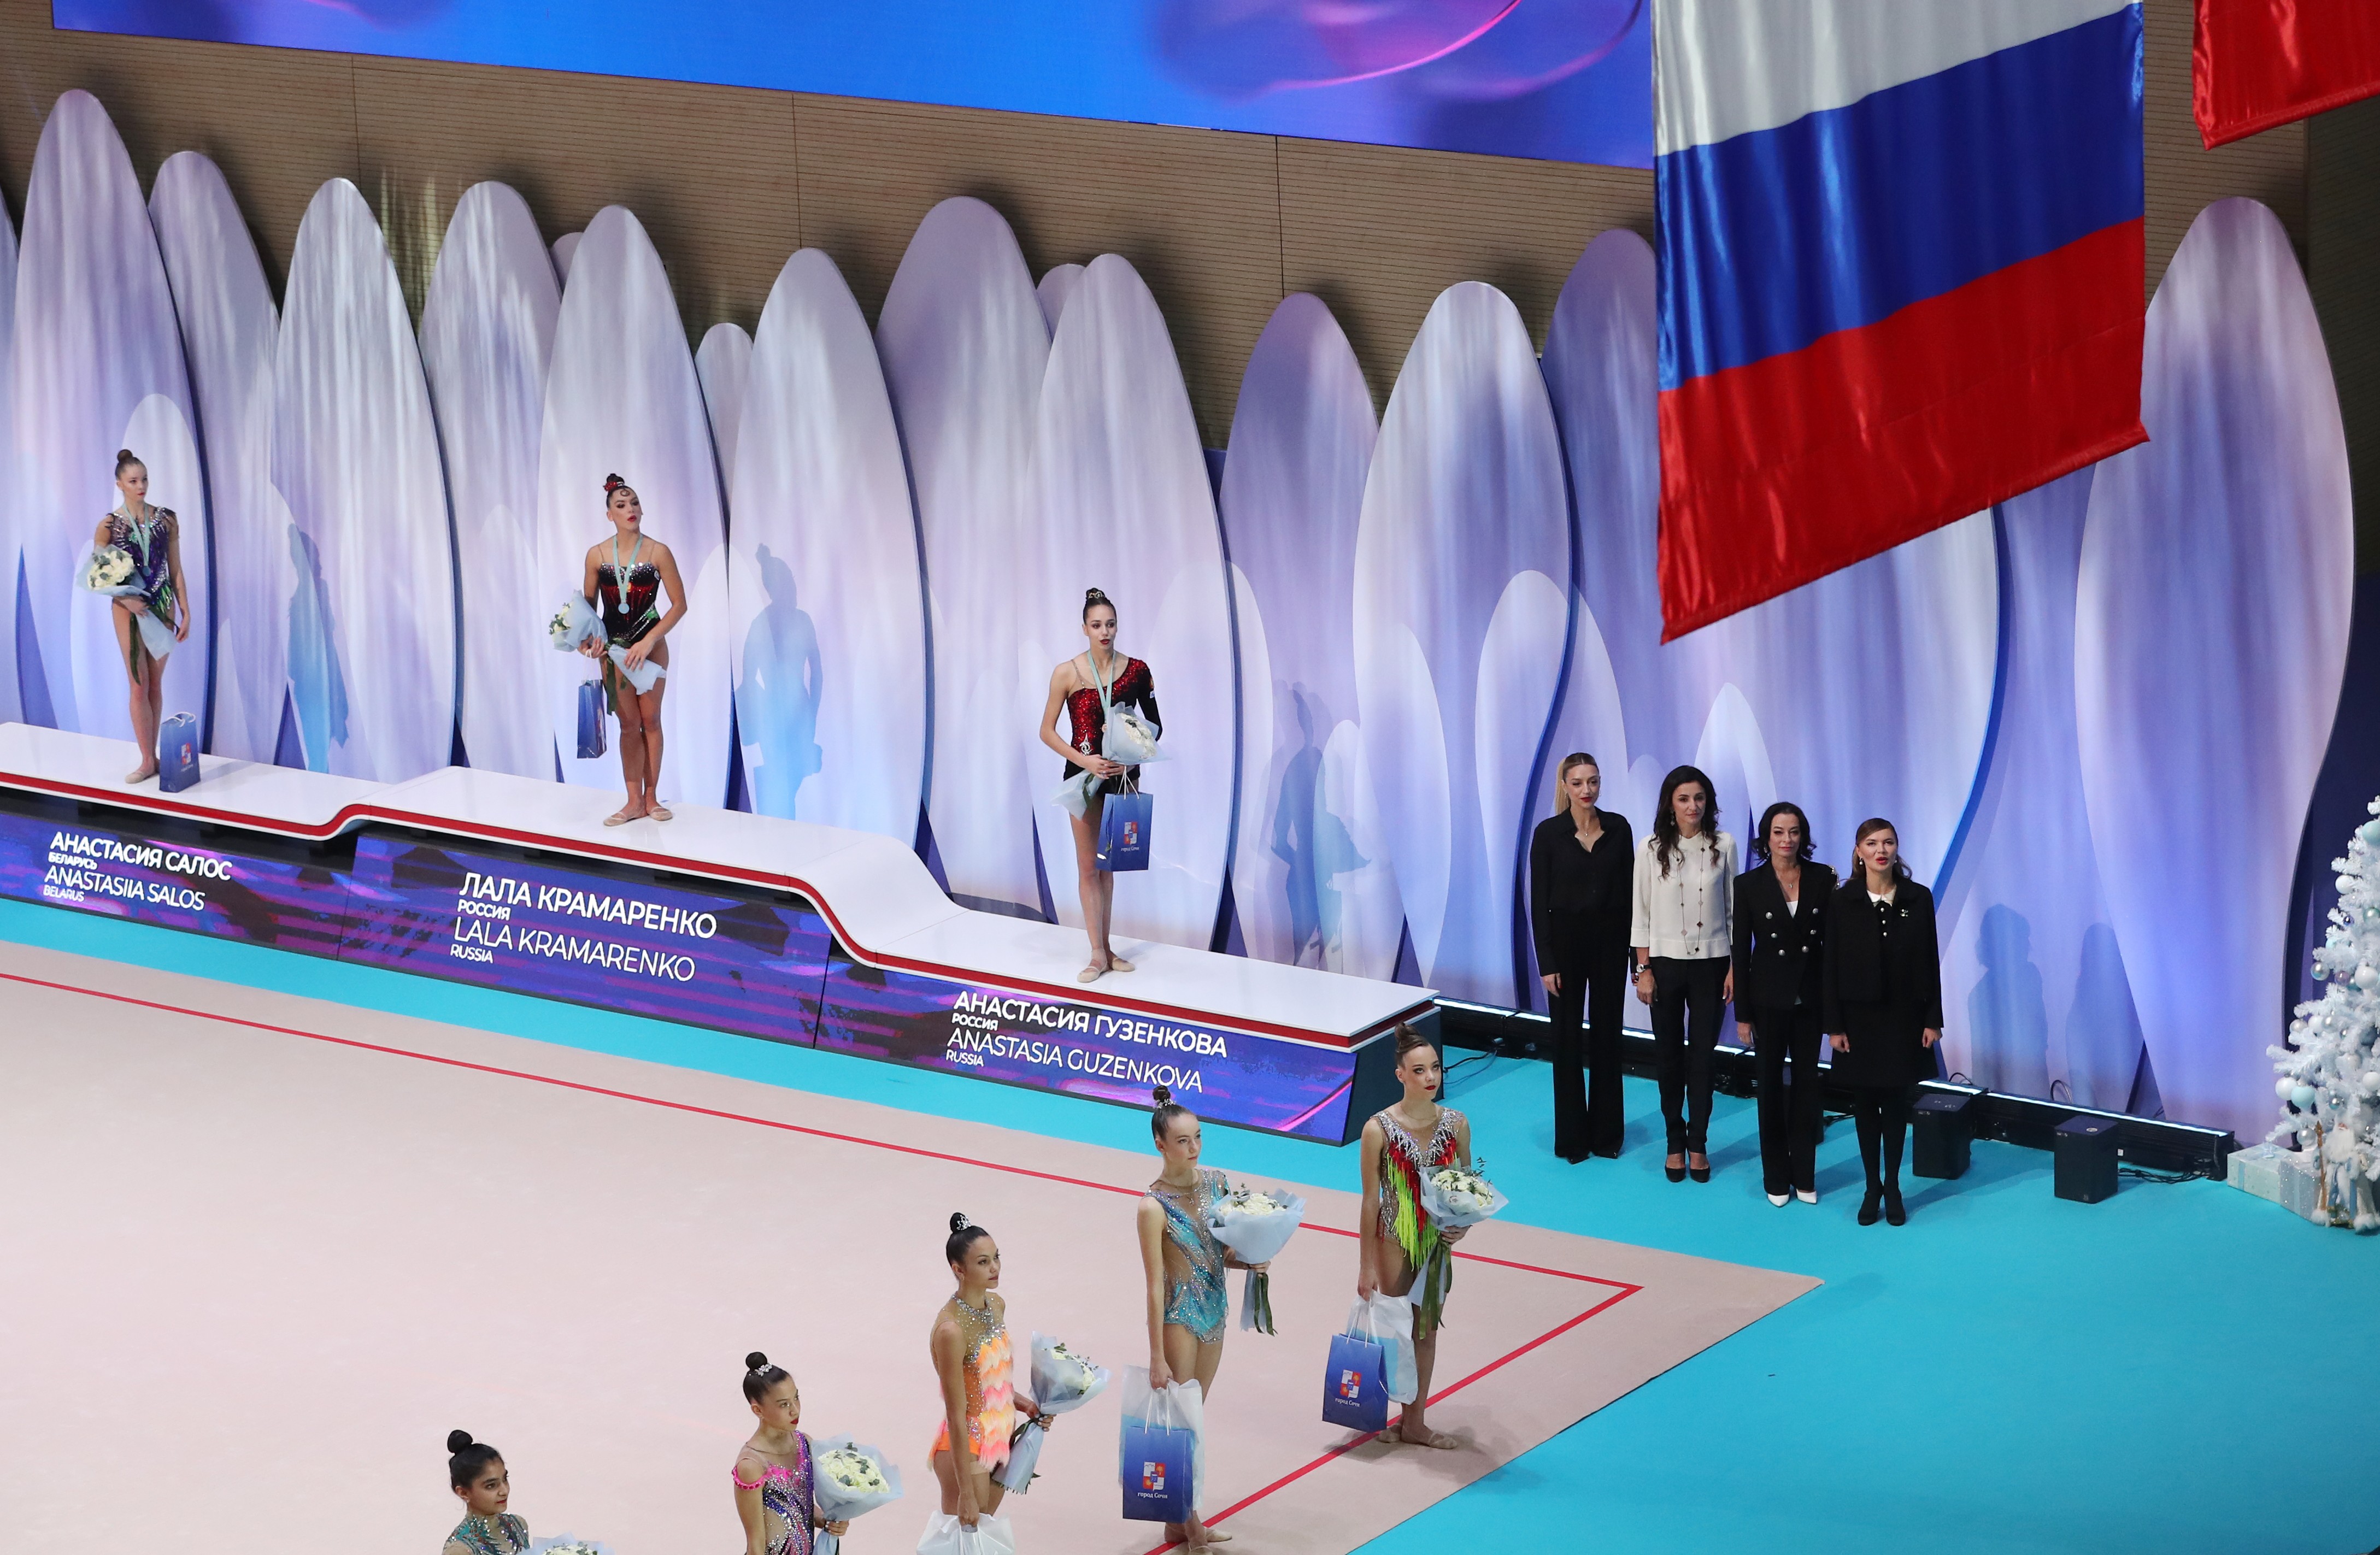 The award ceremony of the "Divine Grace" tournament. On the podium (from left to right) - Anastasia Salos, Lala Kramarenko, Anastasia Guzenkova. Next to the podium - Evgenia Kanaeva, Alexandra Timoshenko, Yulia Barsukova and Alina Kabaeva